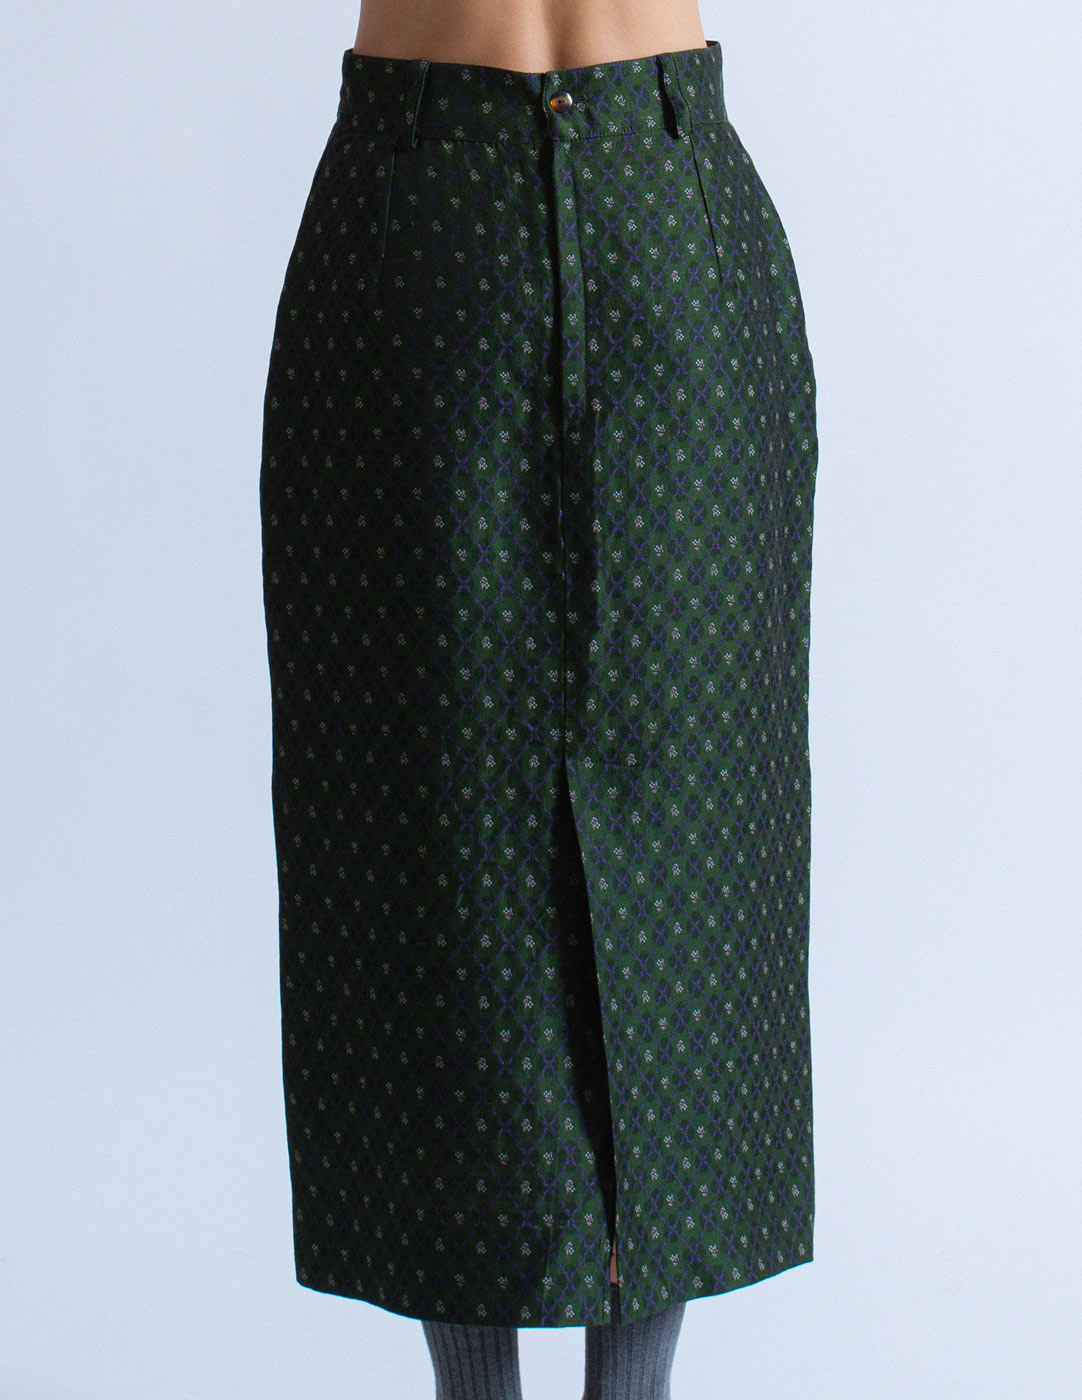 Jean Paul Gaultier vintage floral-motif skirt suit back detail